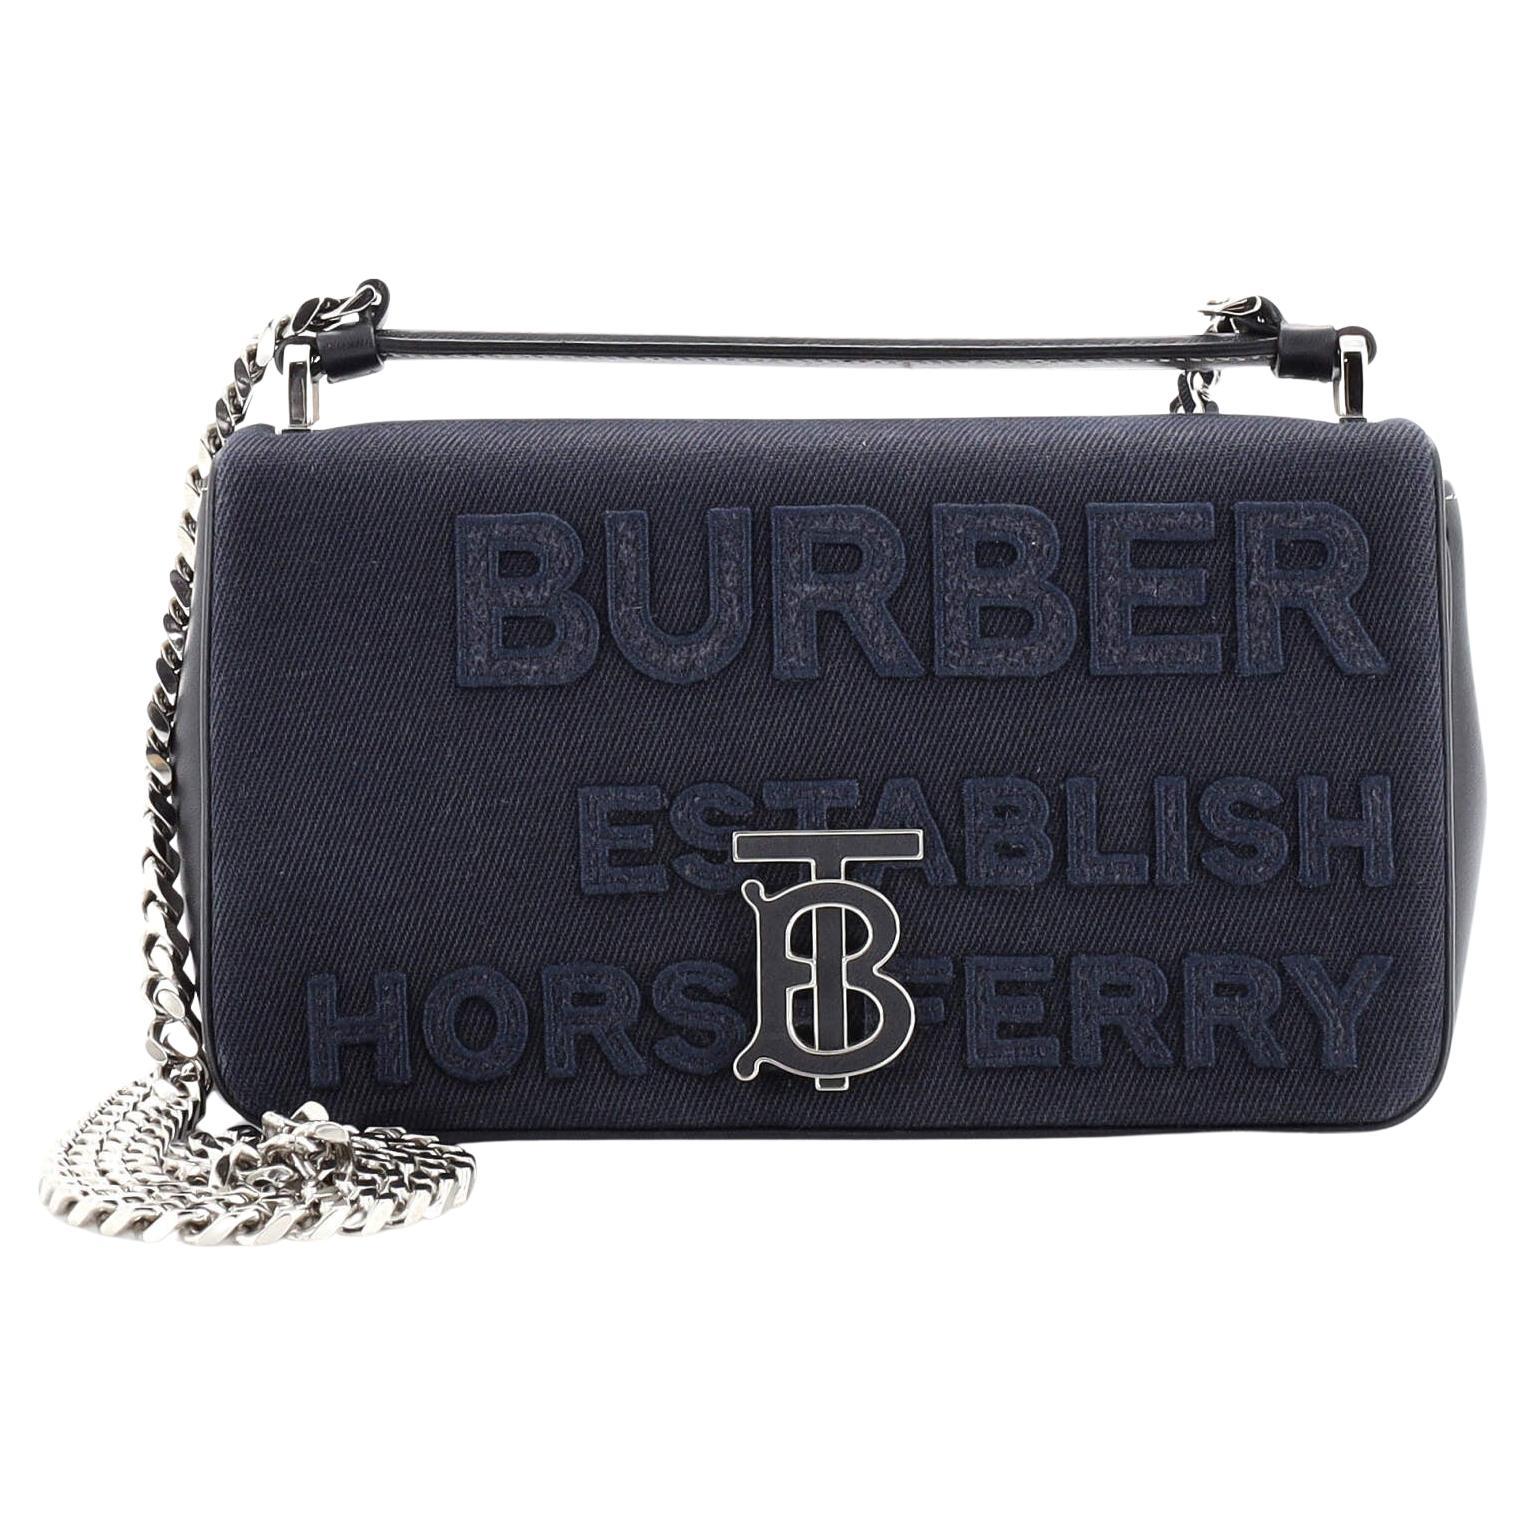 Burberry Black Small Horseferry Leather Lola Crossbody Bag Blue